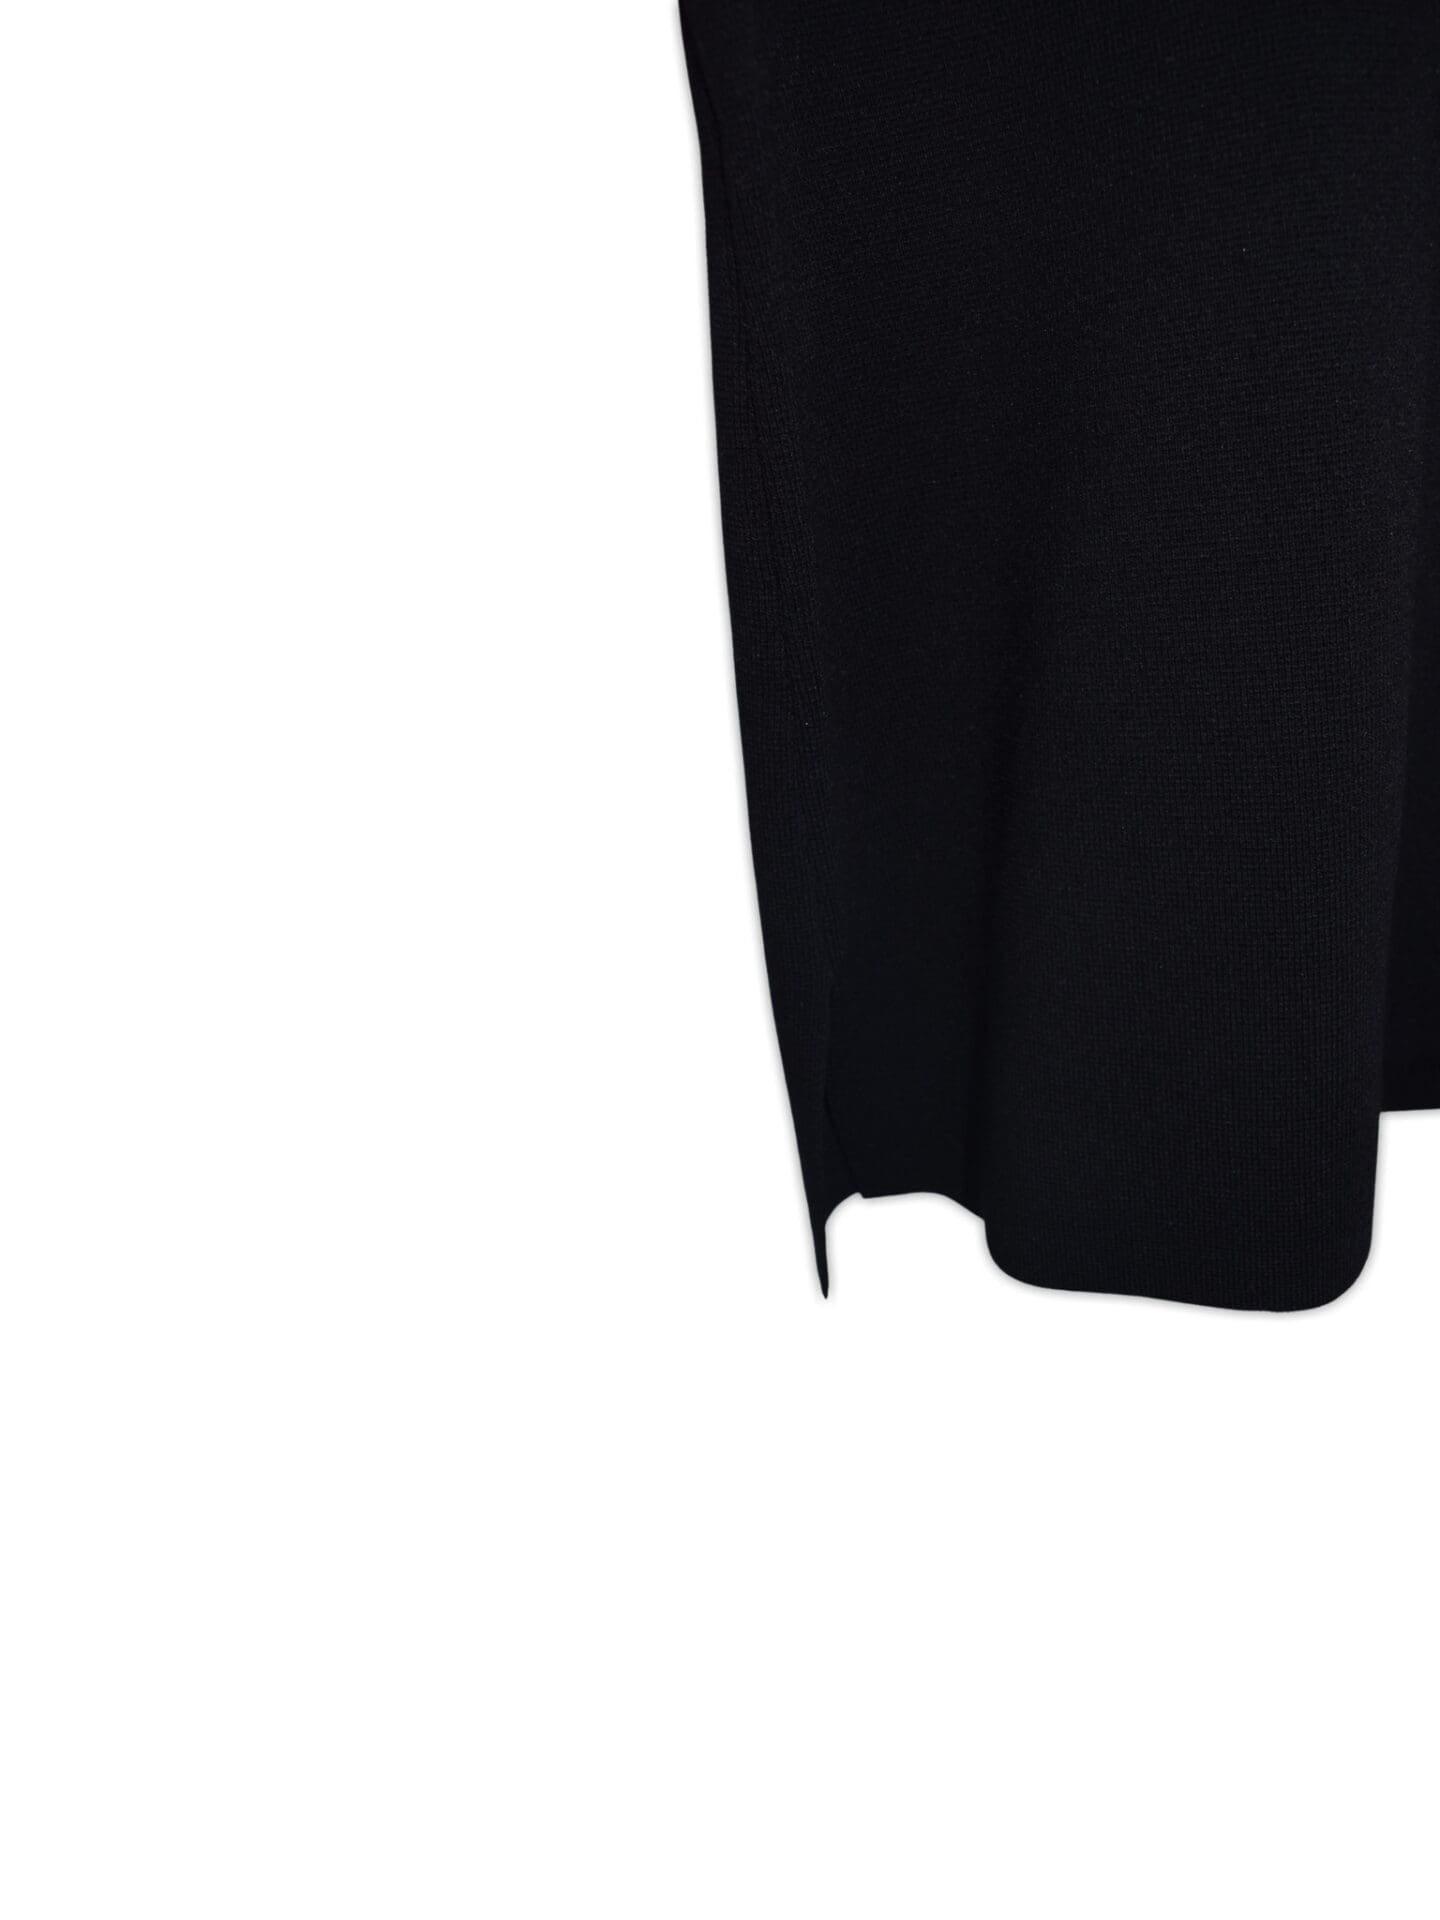 Black, small, ribbed knit, medium weight, high neckline top